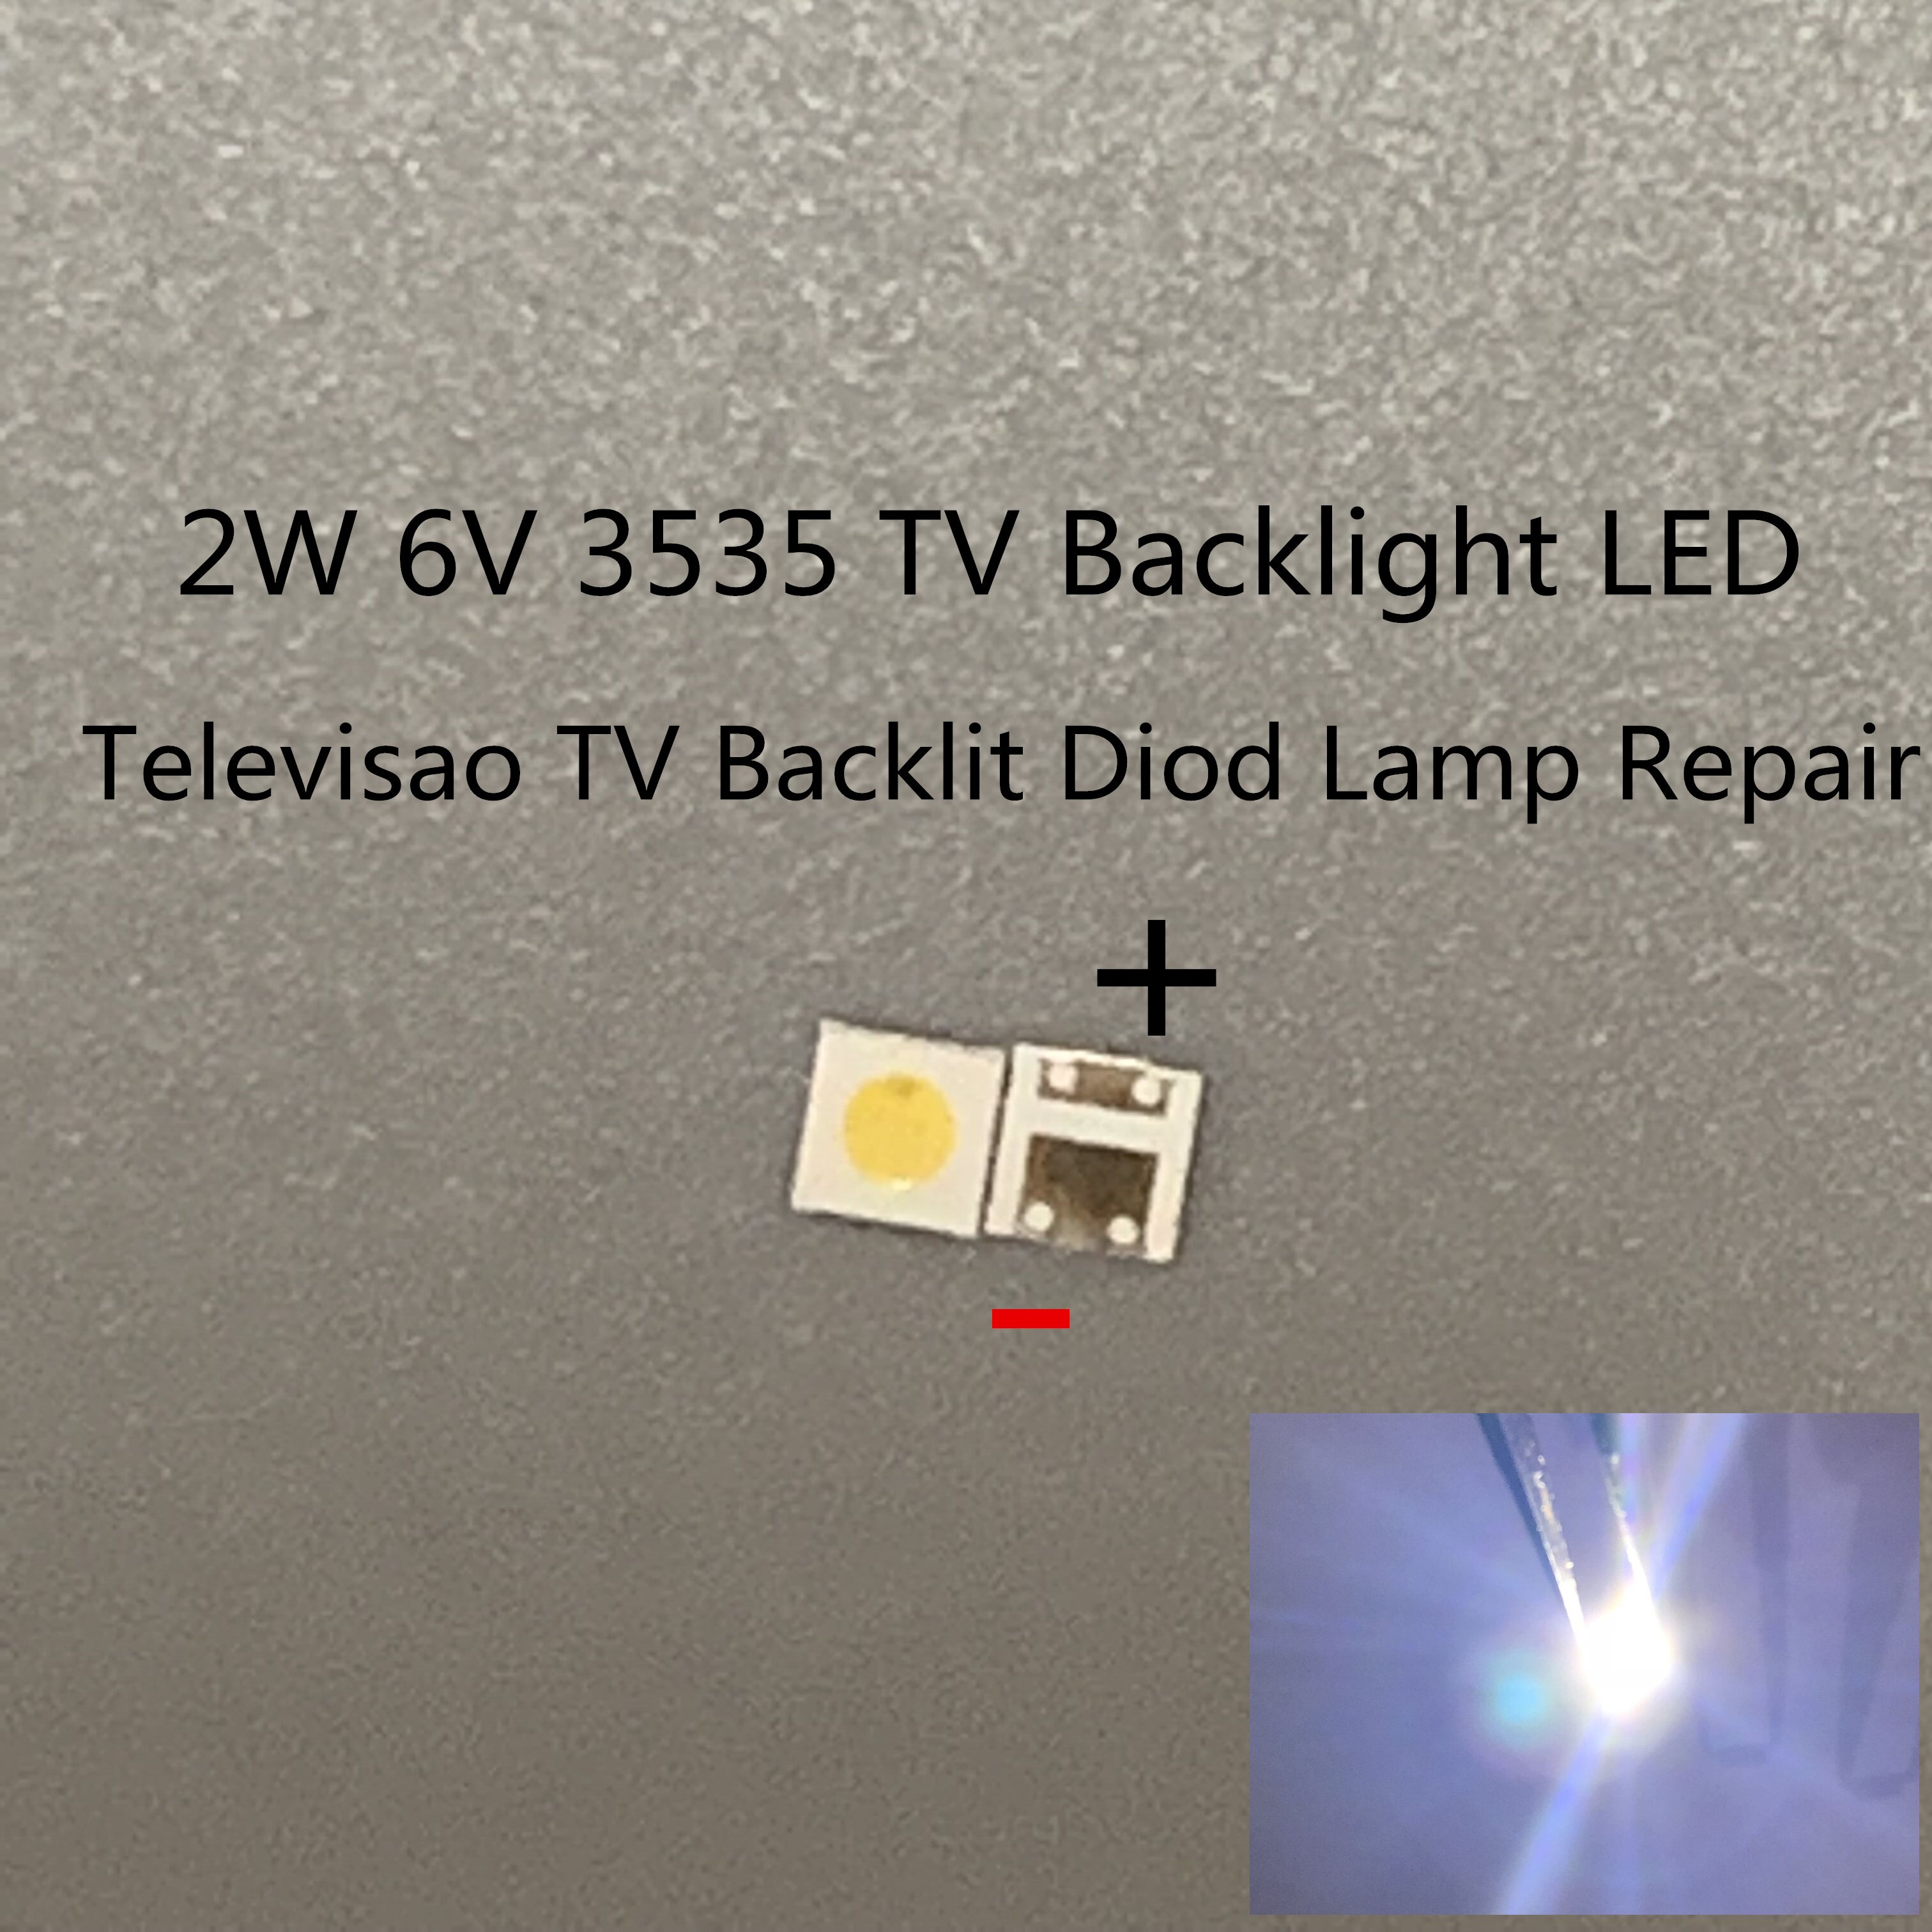 100 Stuks 2W 3V 6V 3535 Tv Backlight Led Smd Diodes Koel Wit Lcd Tv Backlight Televisao backlit Diod Lamp Reparatie Lg Toepassing